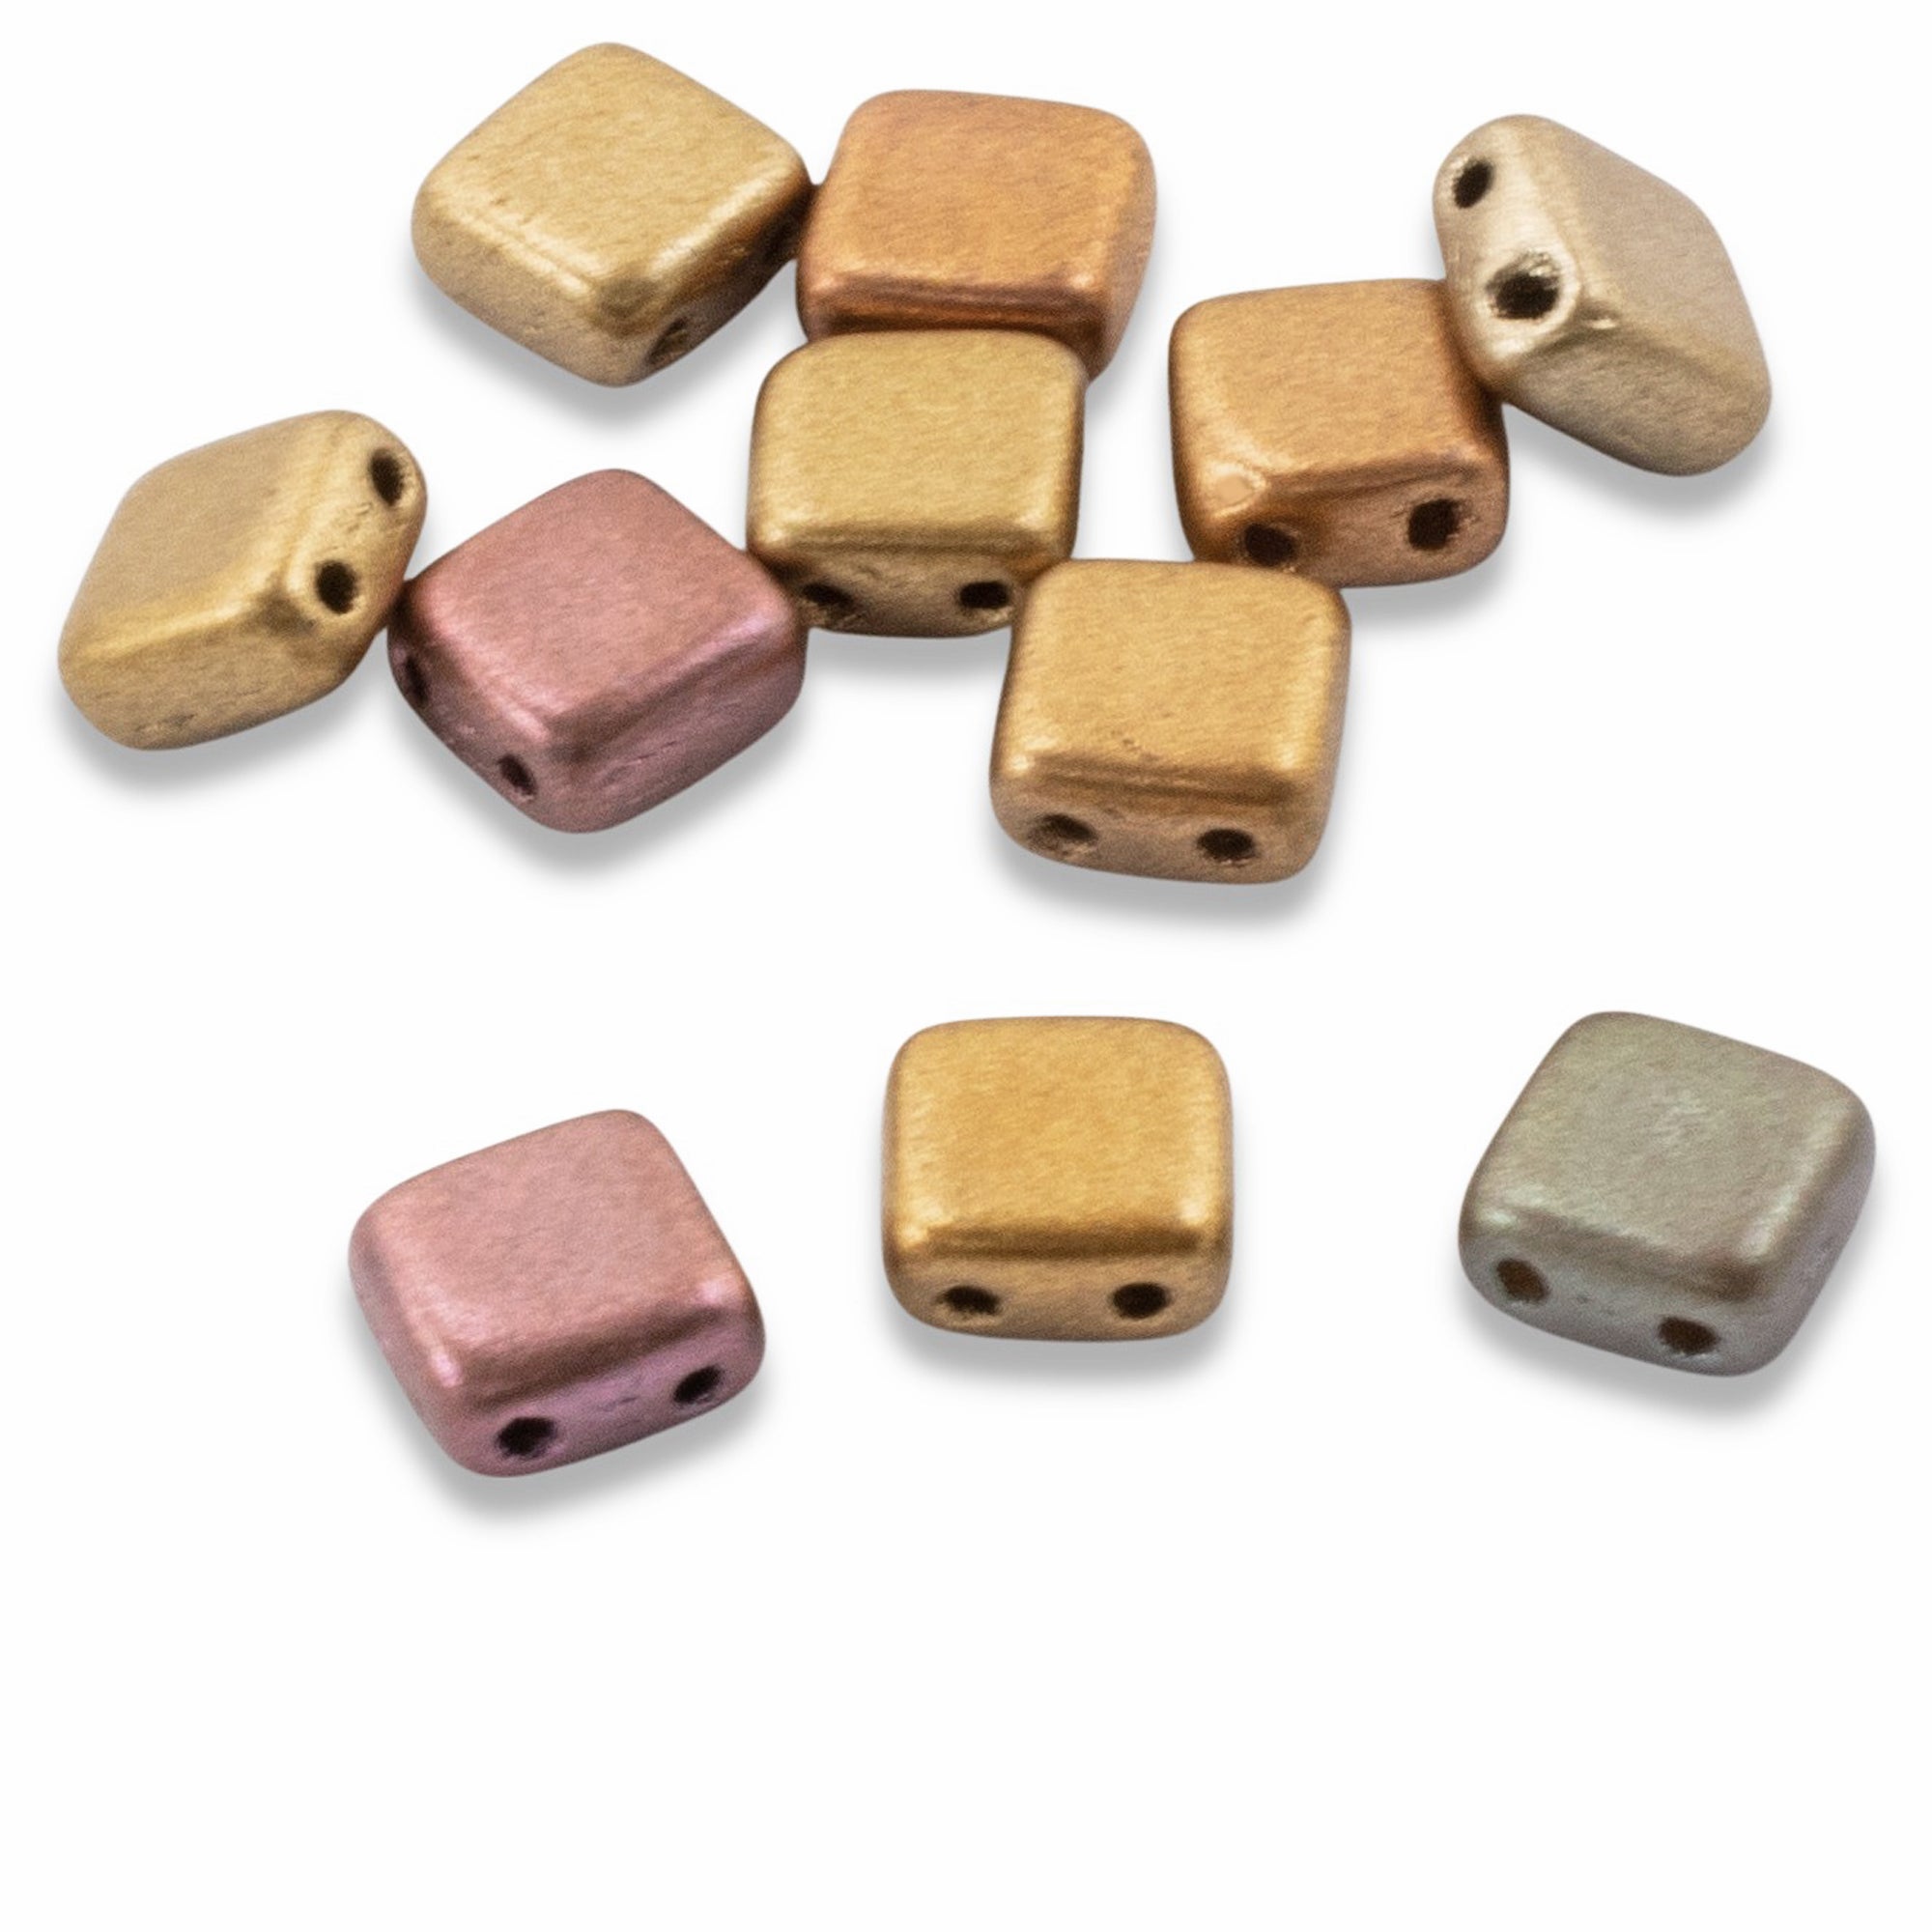 50 Matte Silky Rainbow Square Tile Beads, 6mm 2-Hole Czech Glass